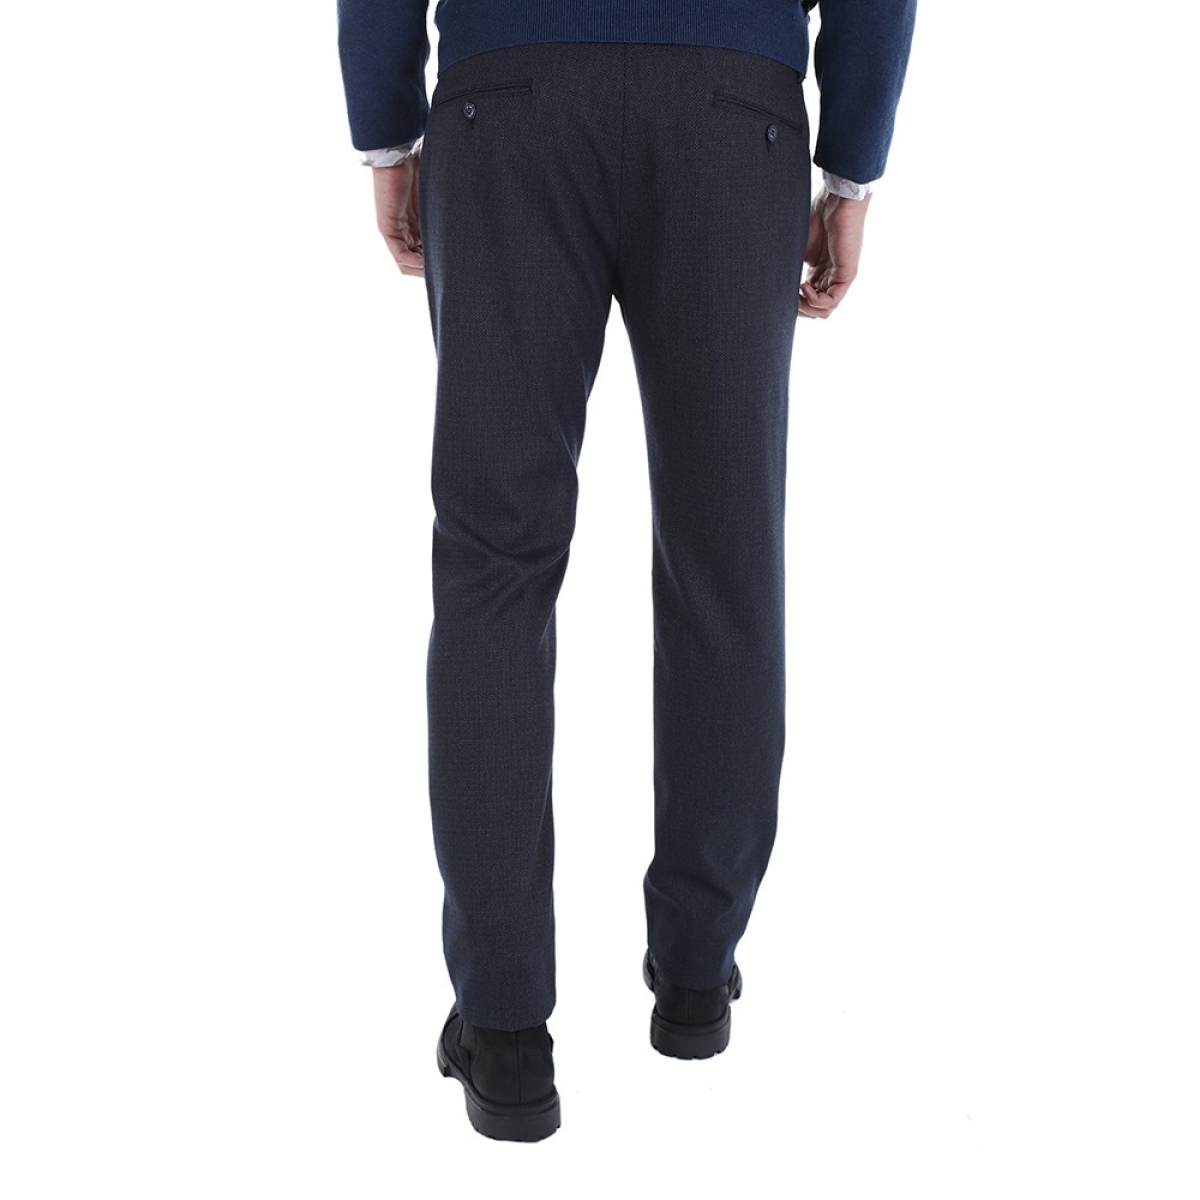 Flo Kışlık Erkek Pantolon Lacivert/Navy 2023006. 1